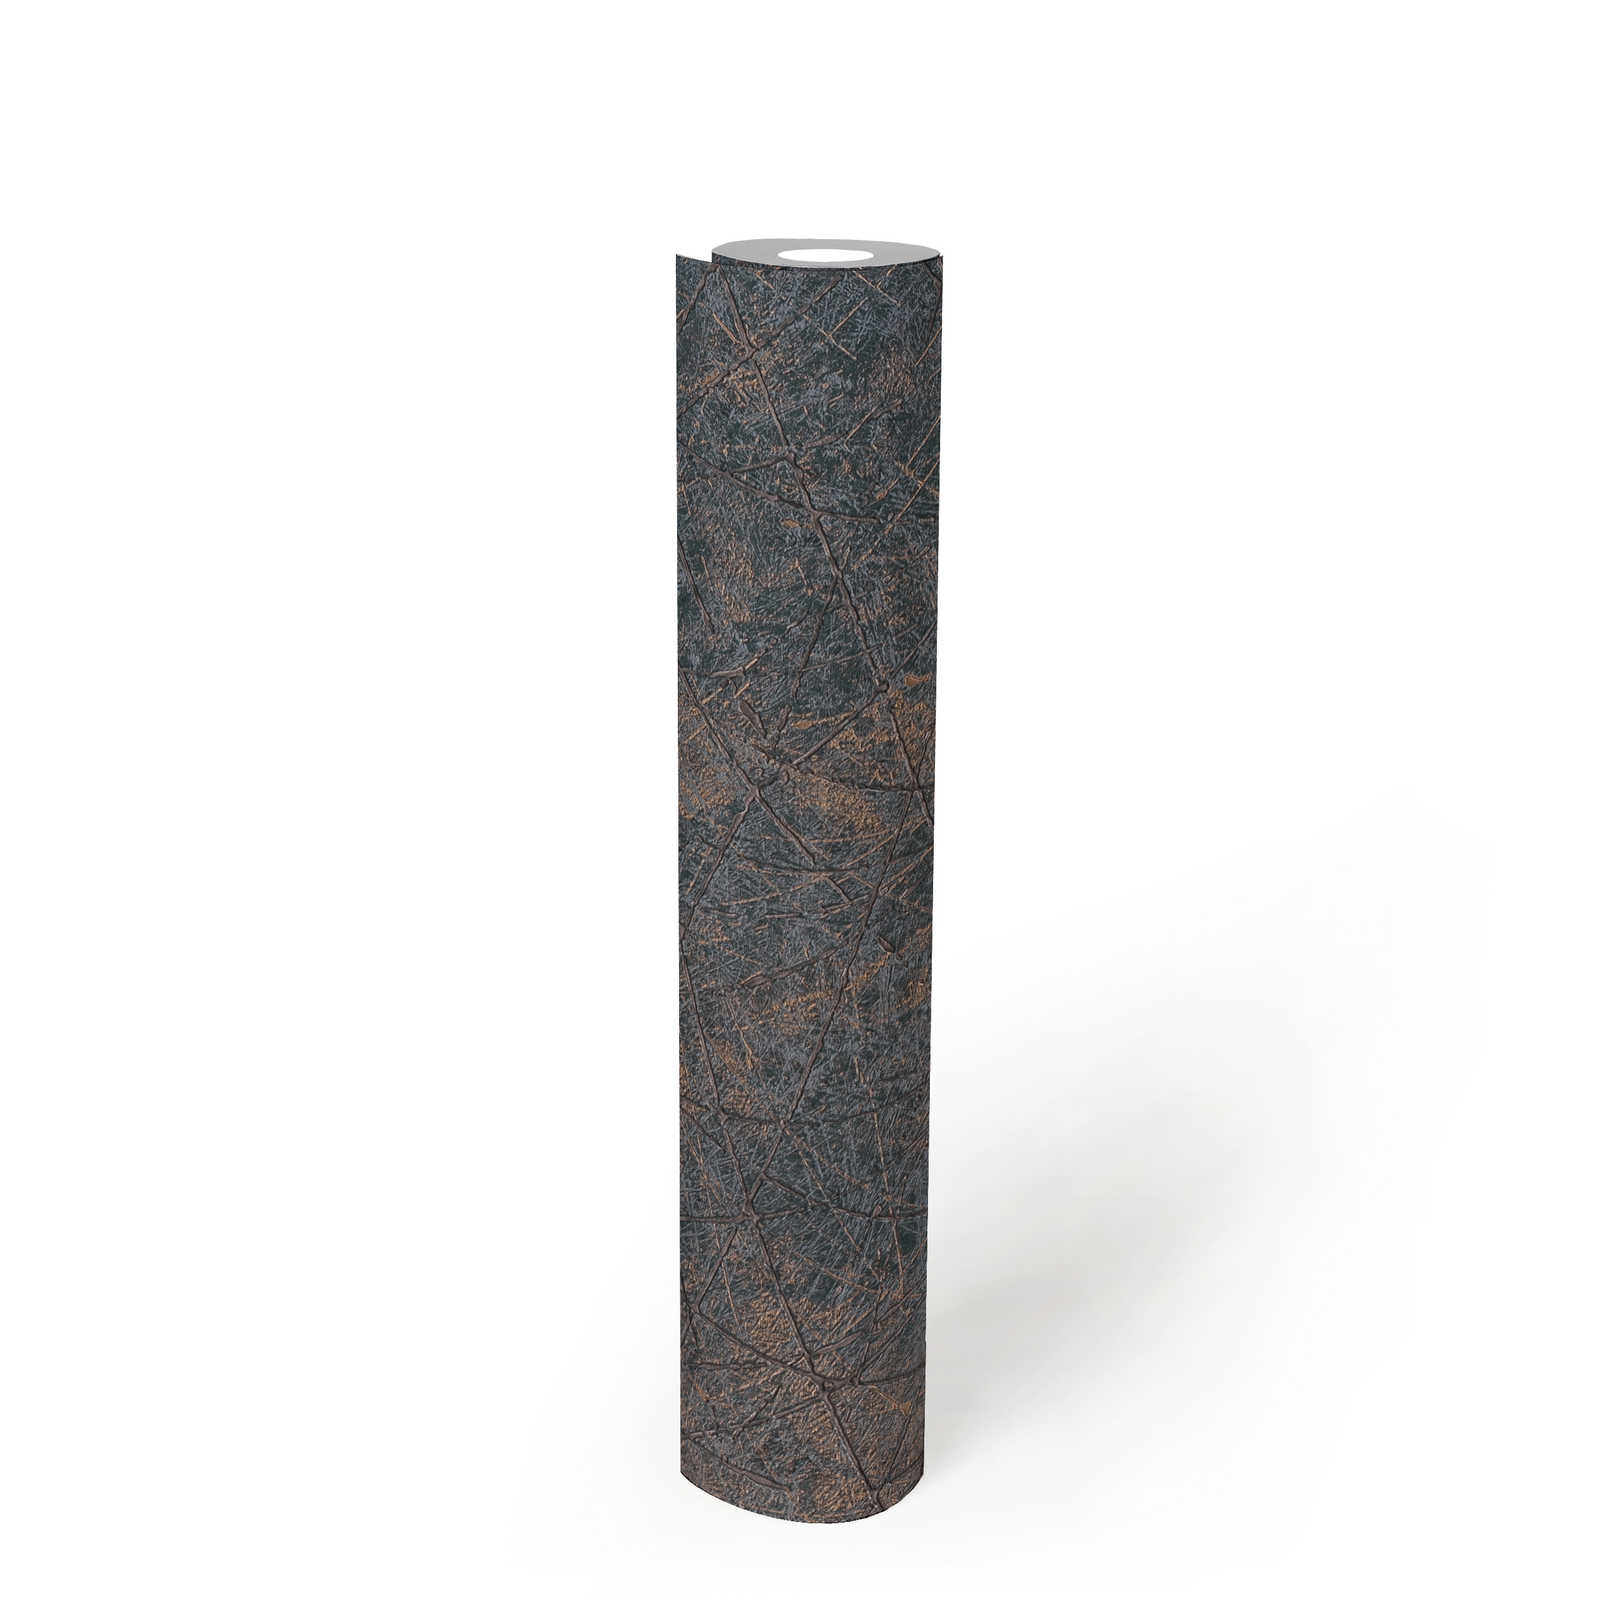             Metallic-look non-woven wallpaper with graphic line pattern - black, bronze
        